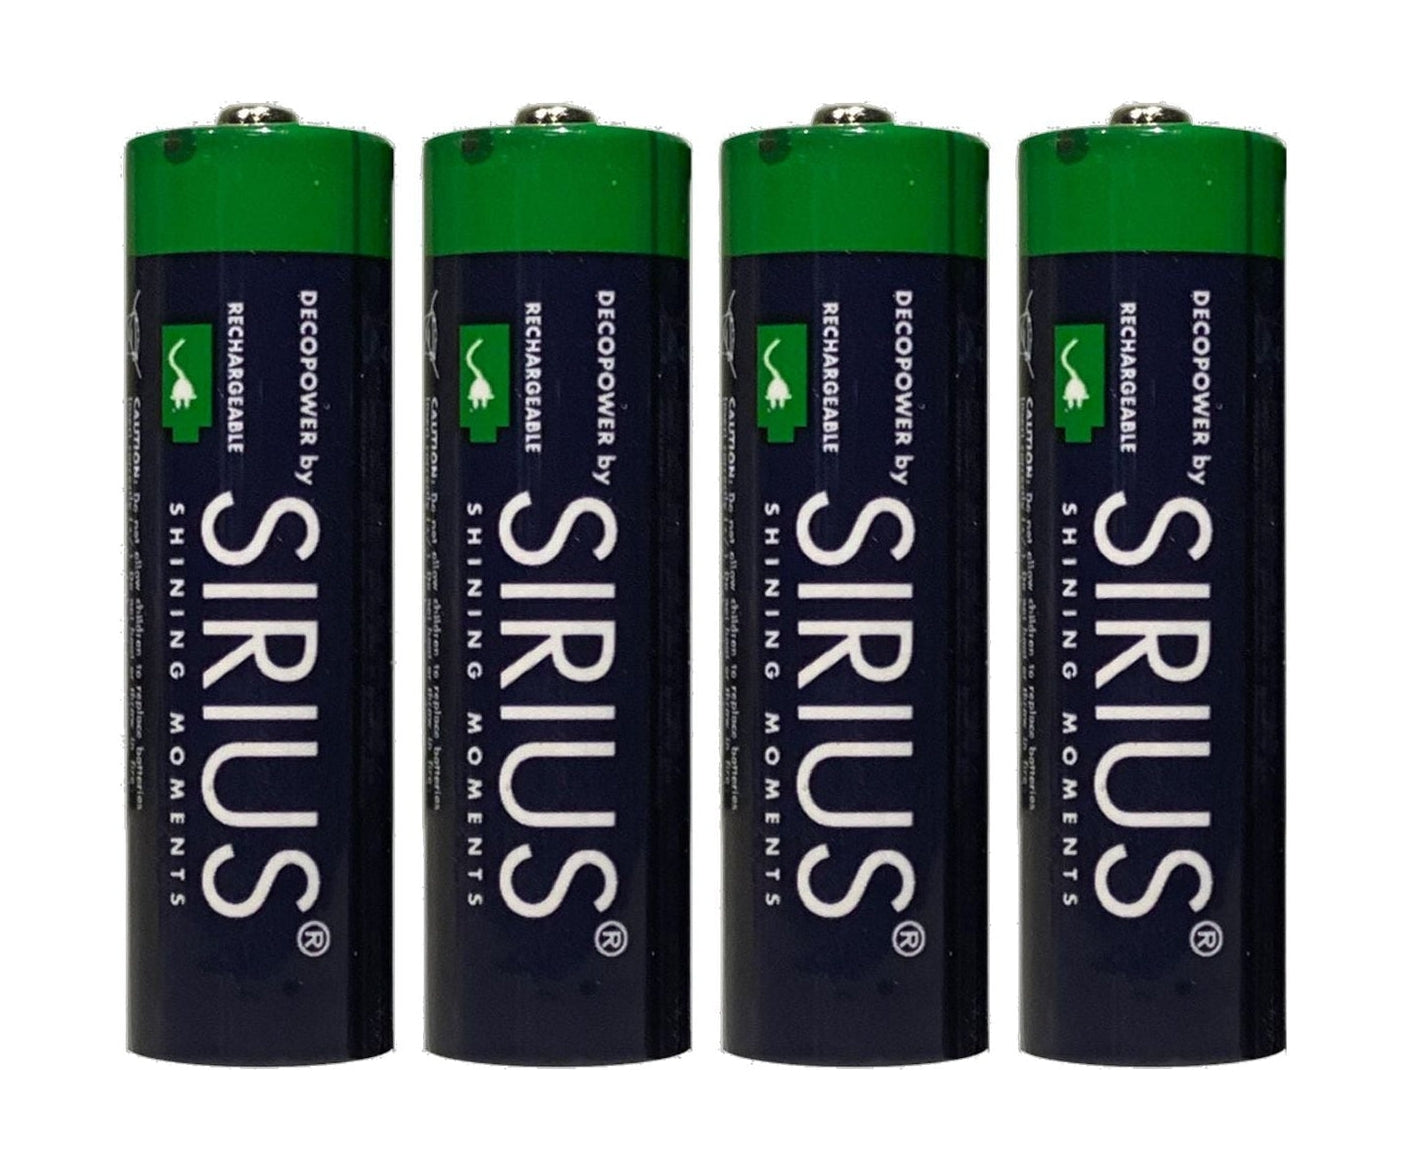 Sirius deco power aa oplaadbare batterijen, 4 pc's set